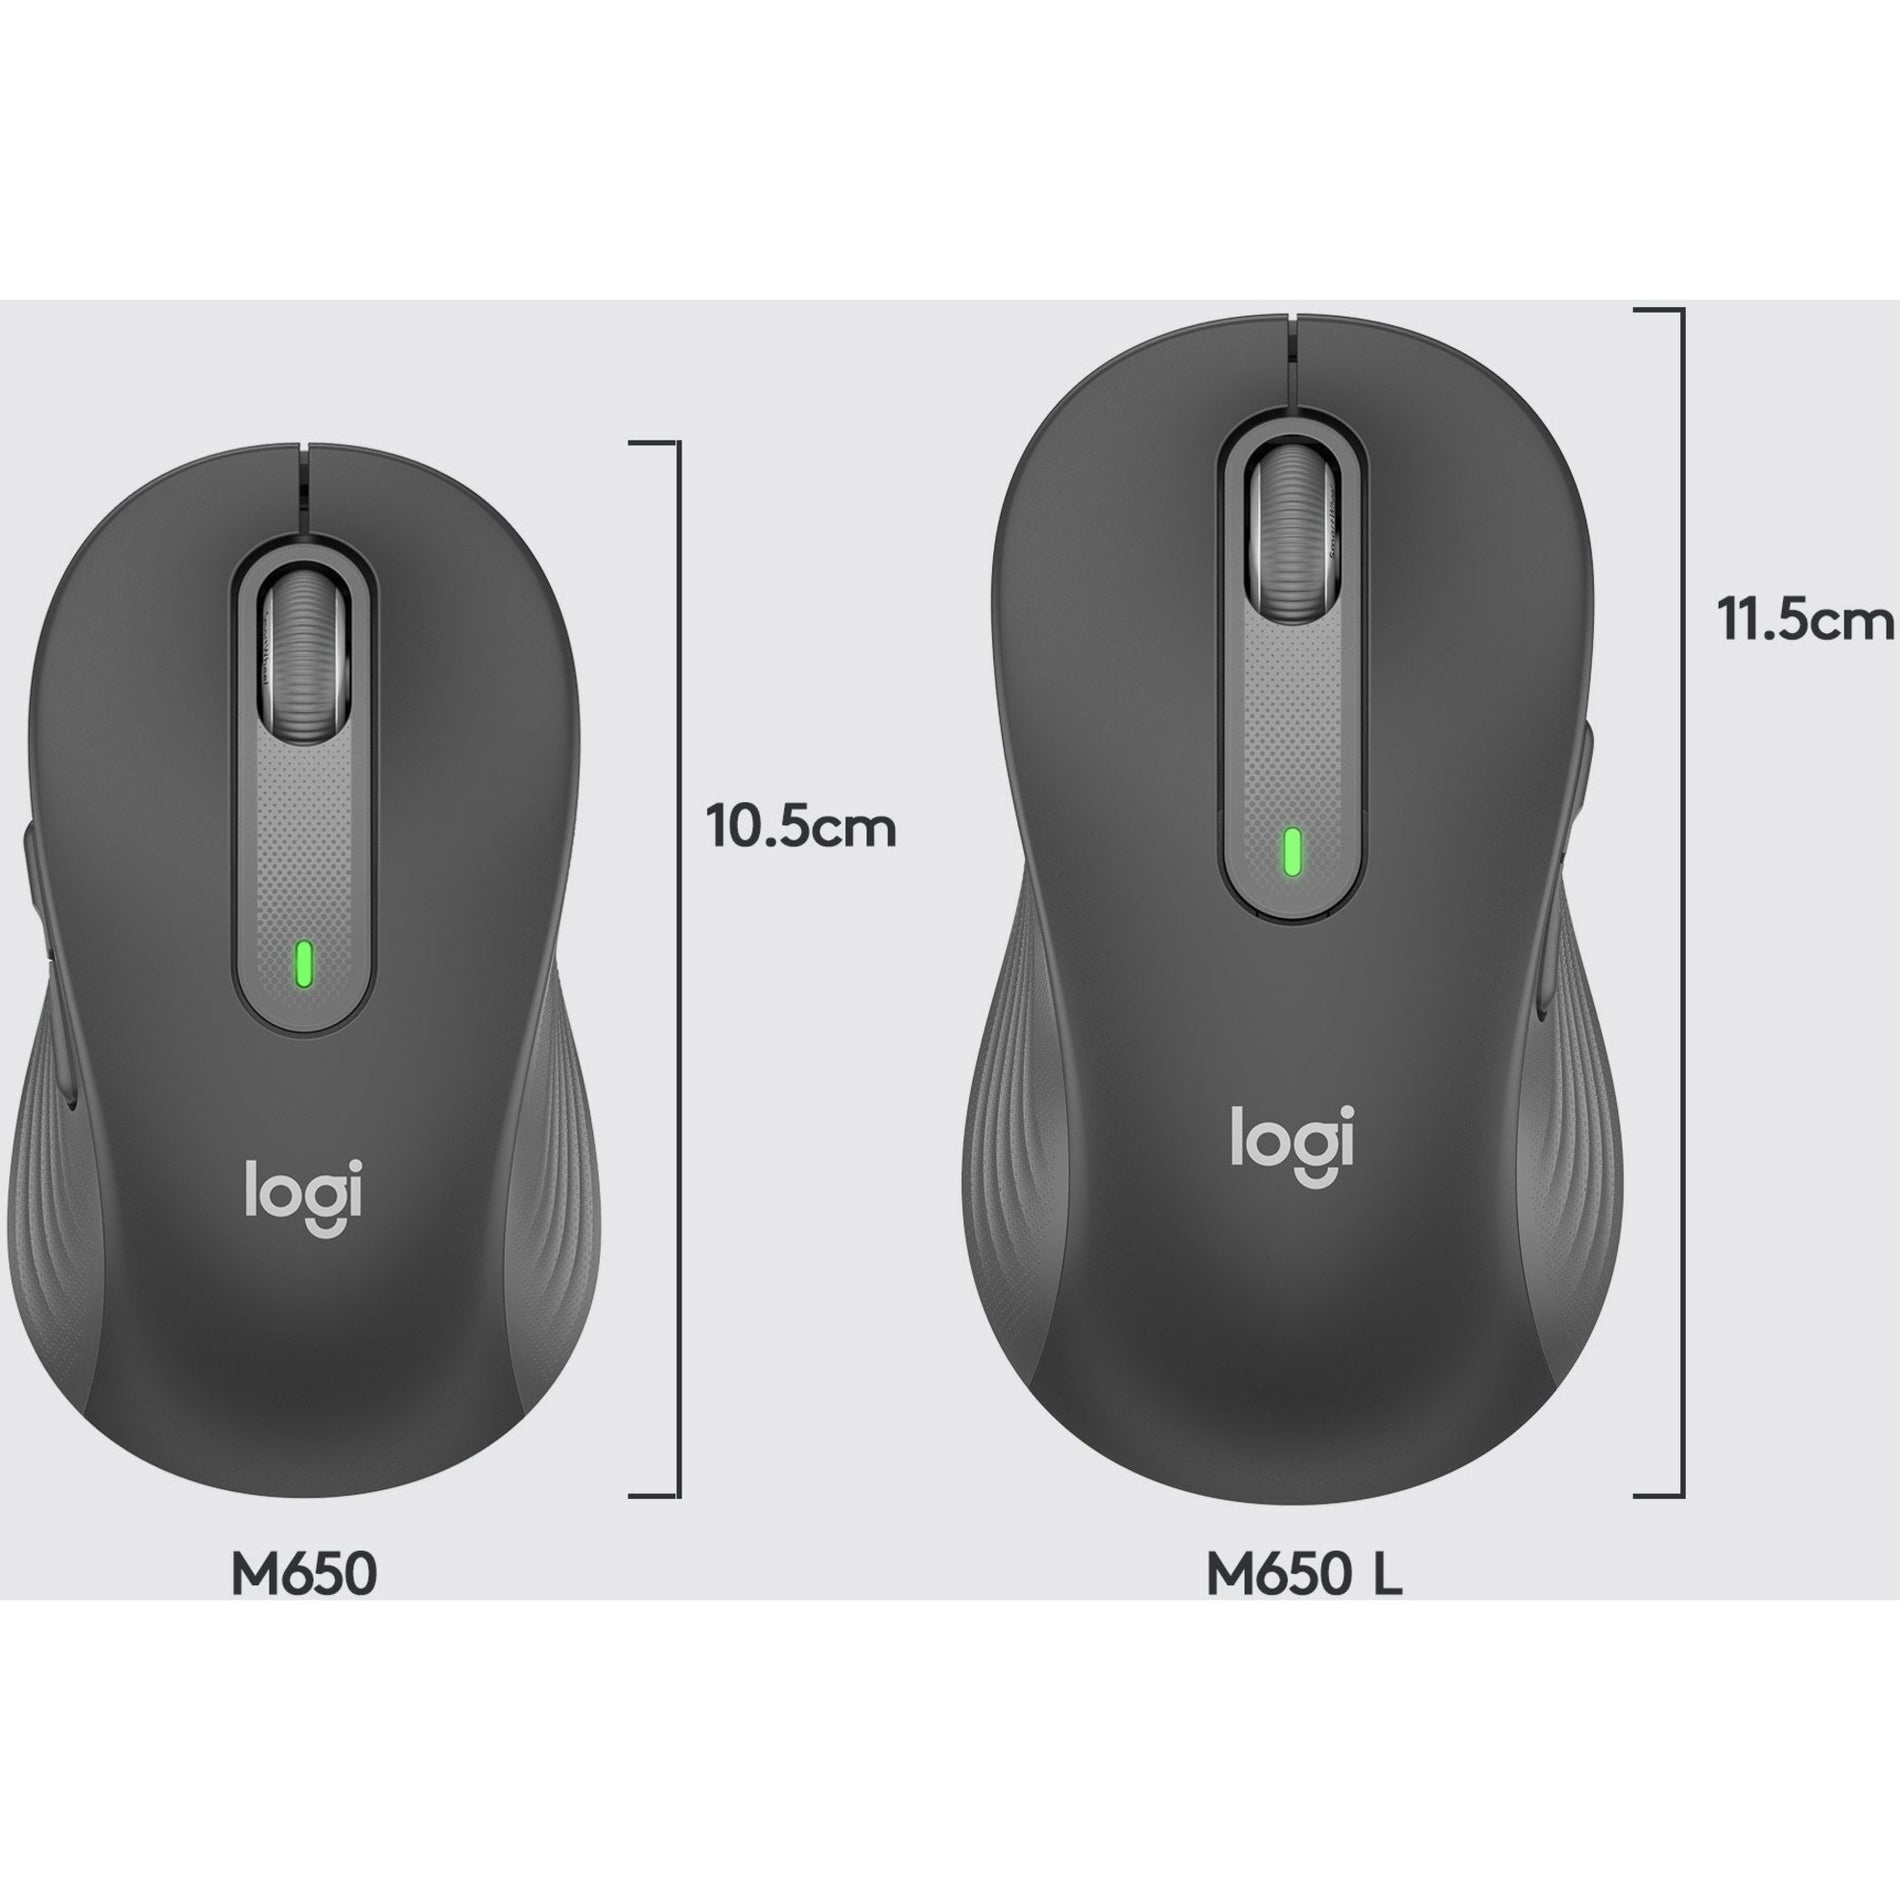 Logitech 910-006272 Signature M650 Mouse, Wireless Bluetooth/Radio Frequency, Graphite